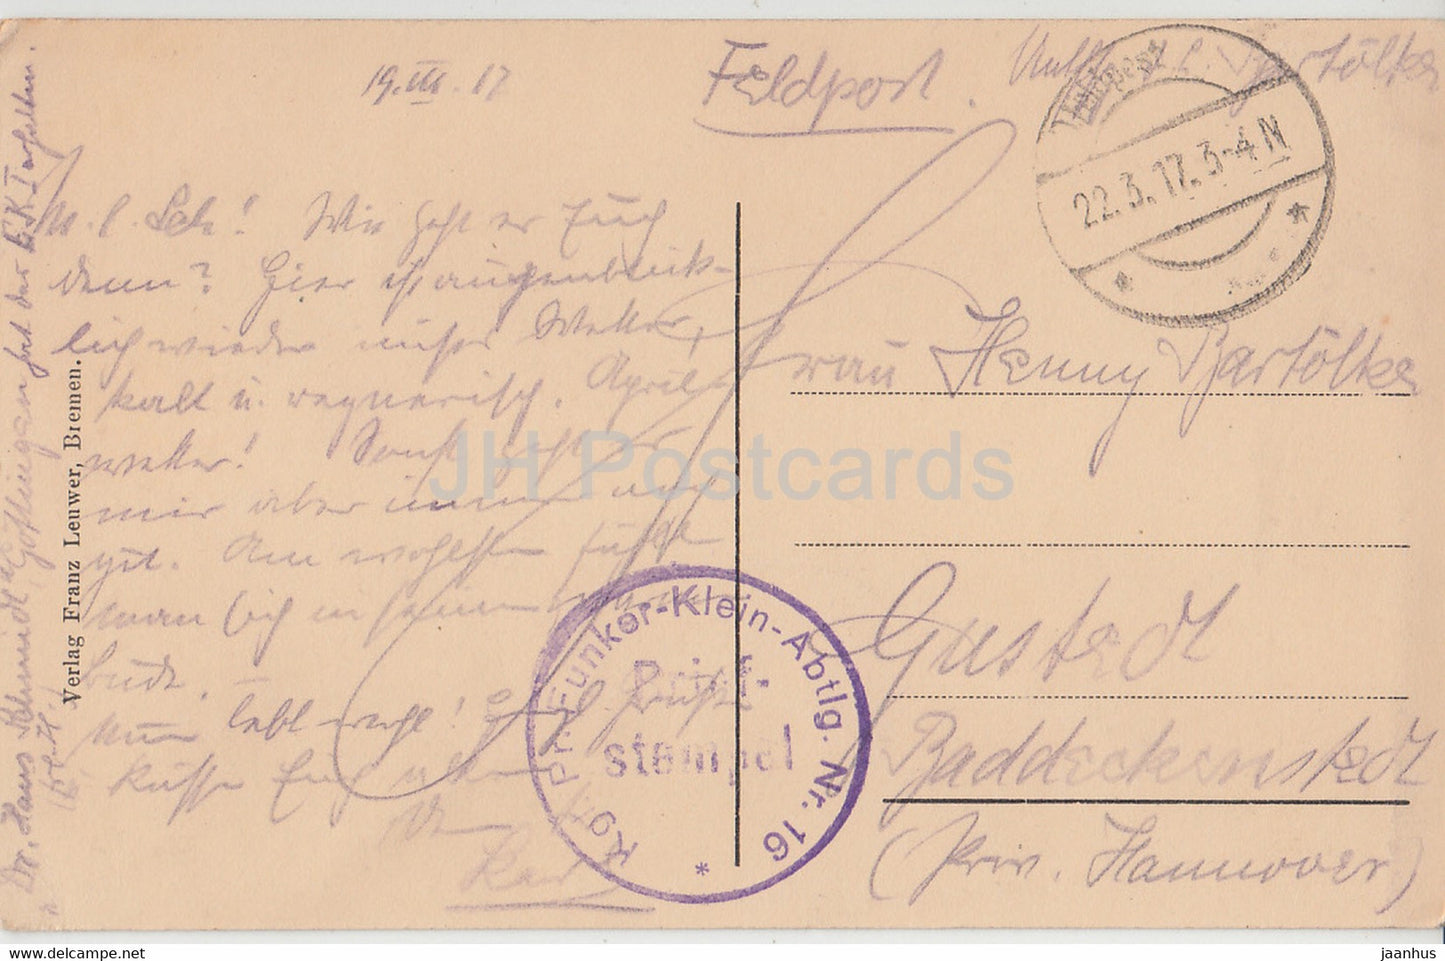 Cambrai - Rathaus - Feldpost - carte postale ancienne - 1917 - France - utilisé